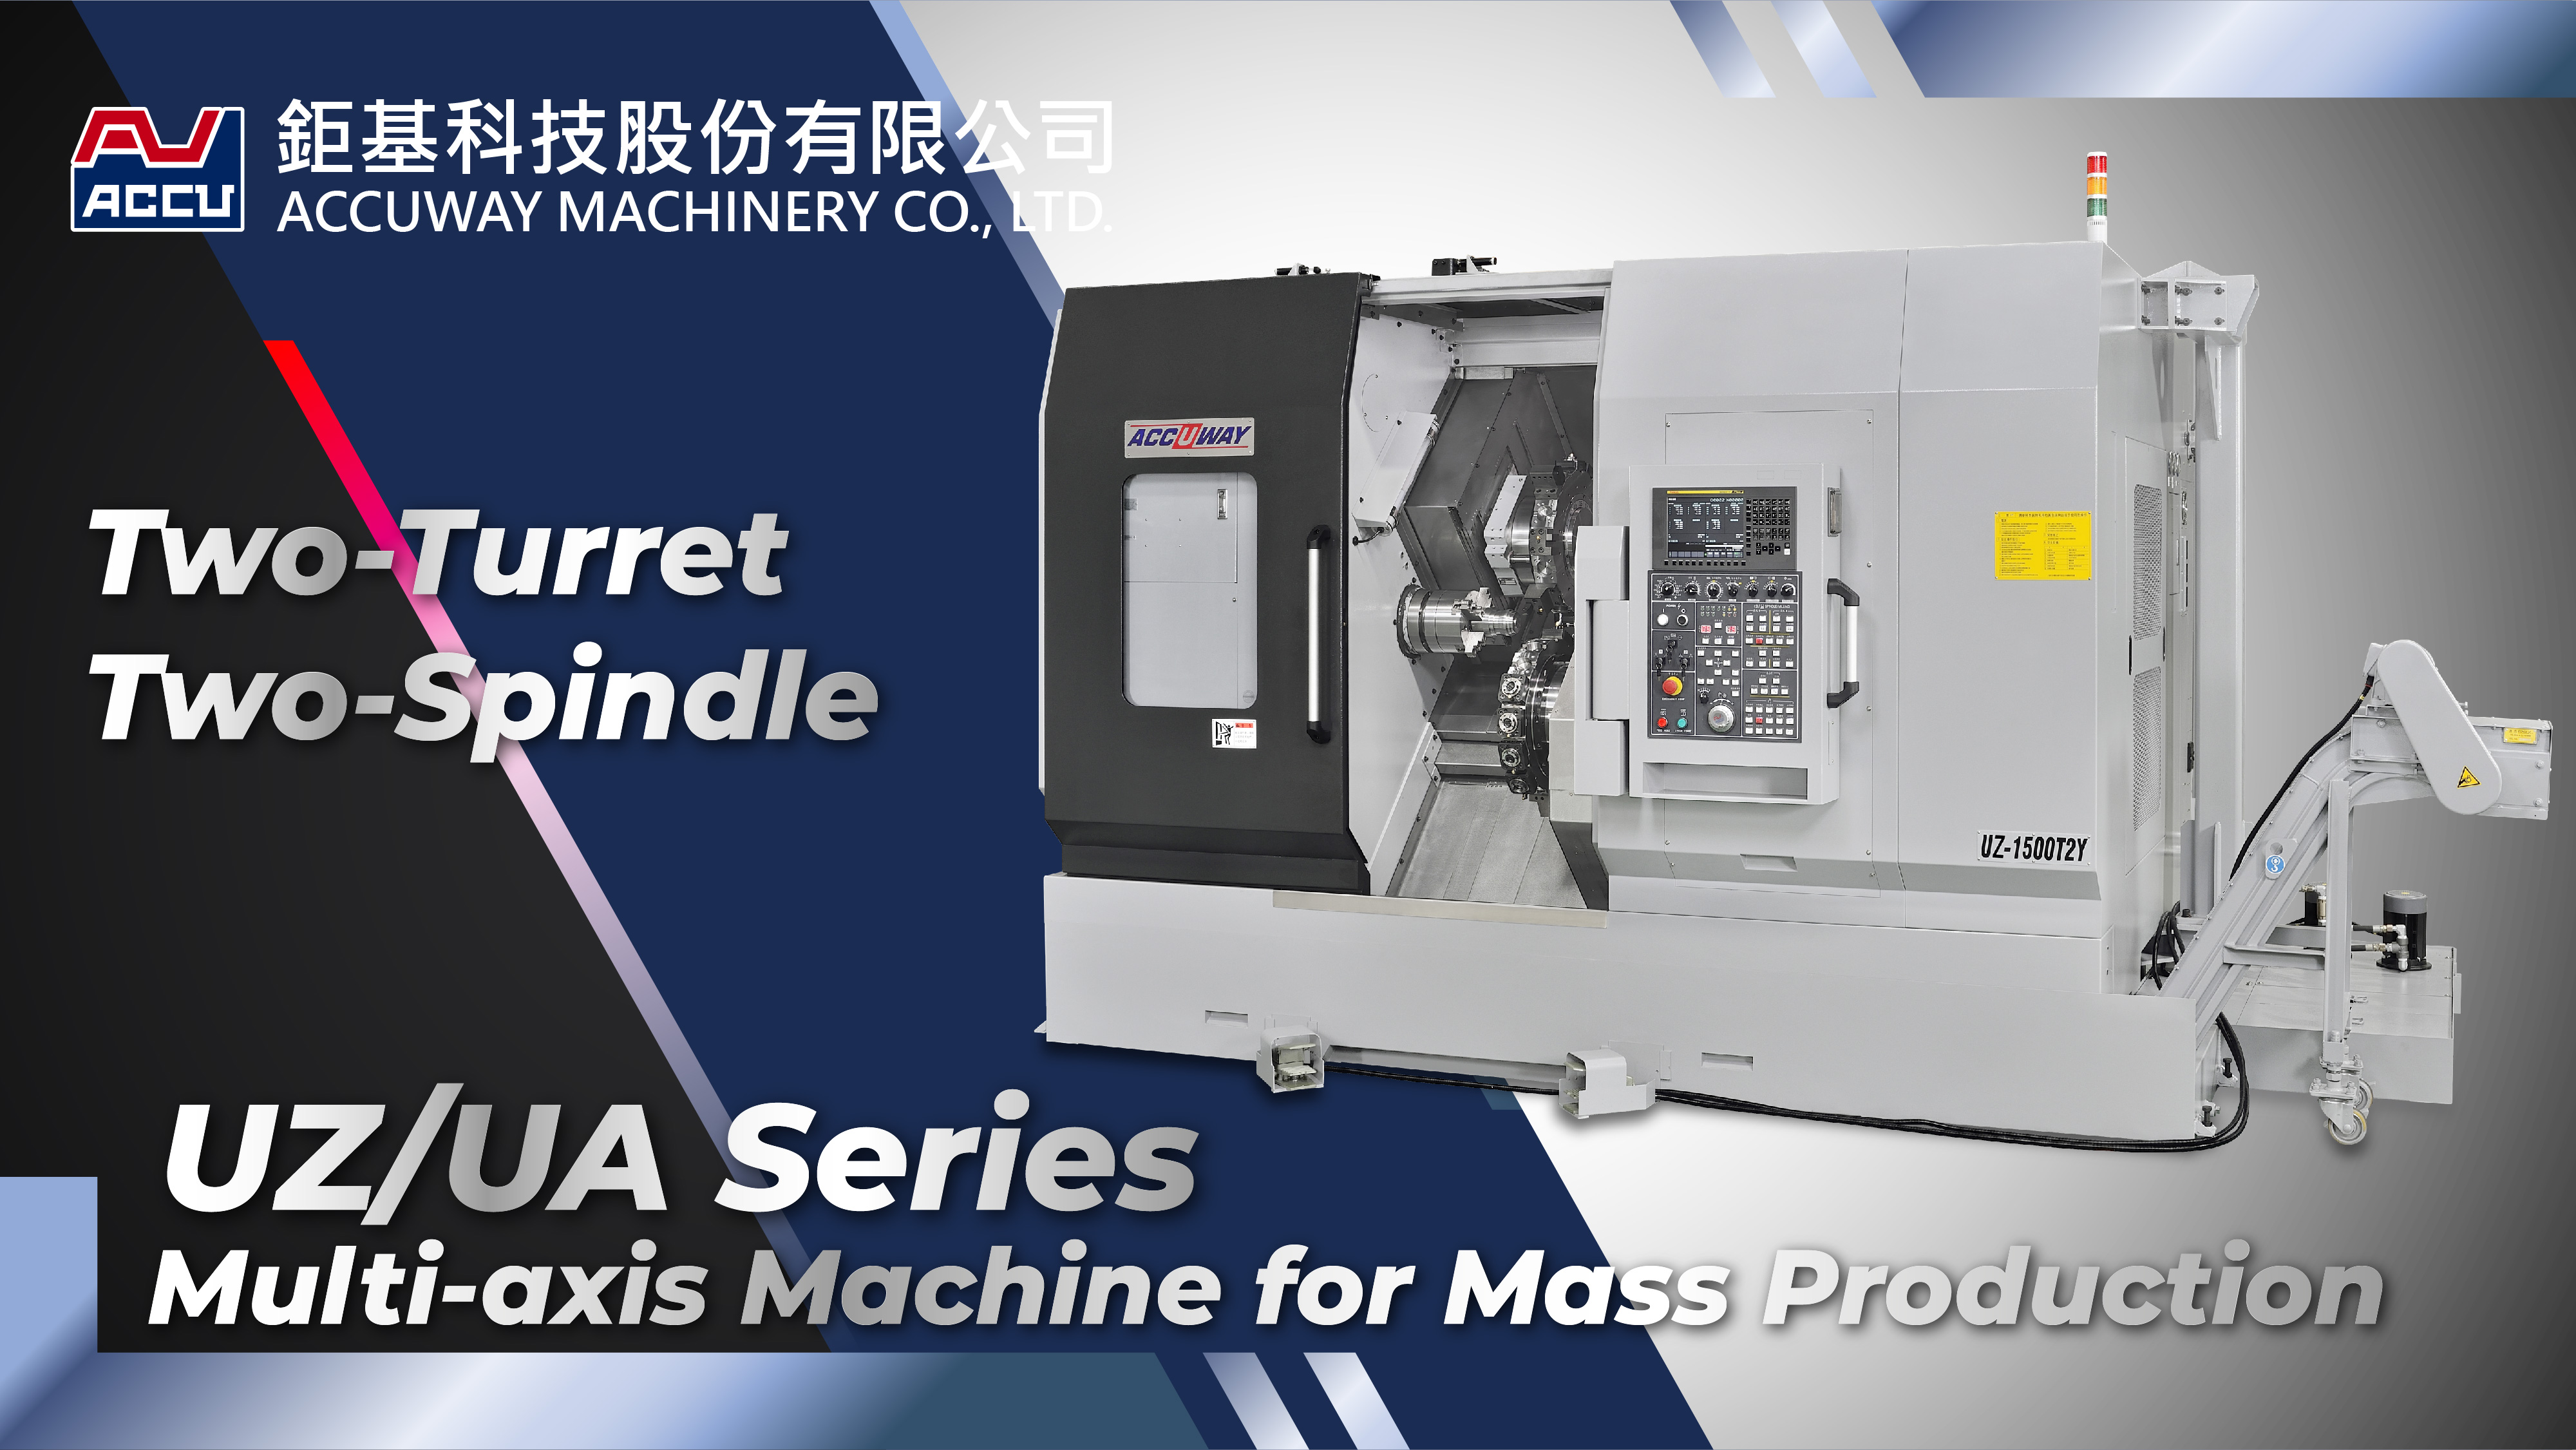 Multi-axis Machine for Mass Production_UA/UZ-1500T2Y